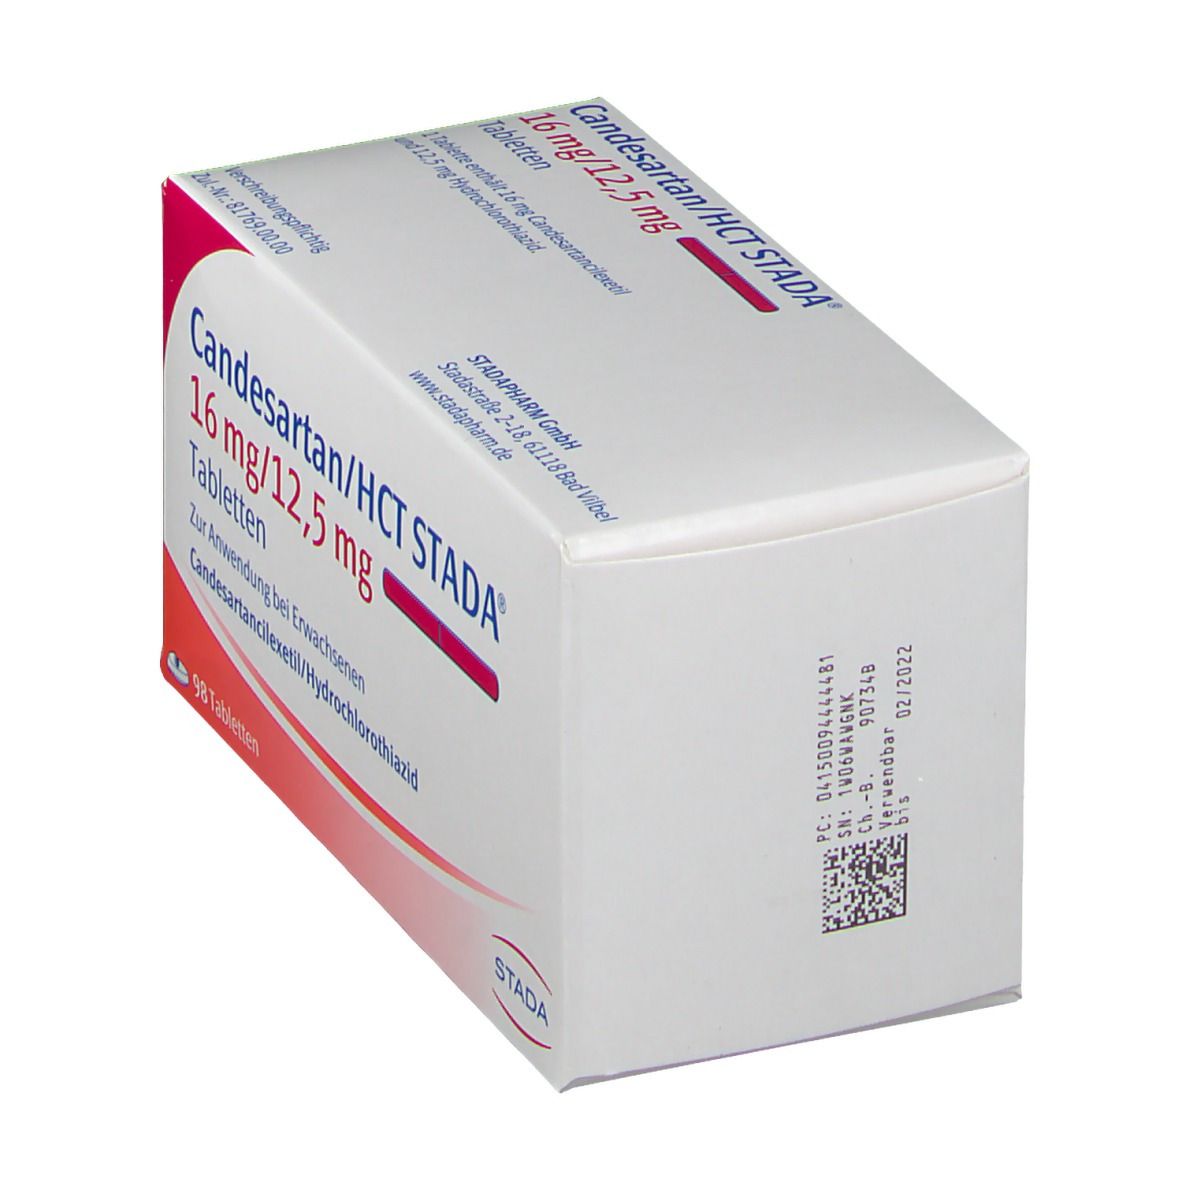 Candesartan/HTC STADA® 16 mg/12,5 mg